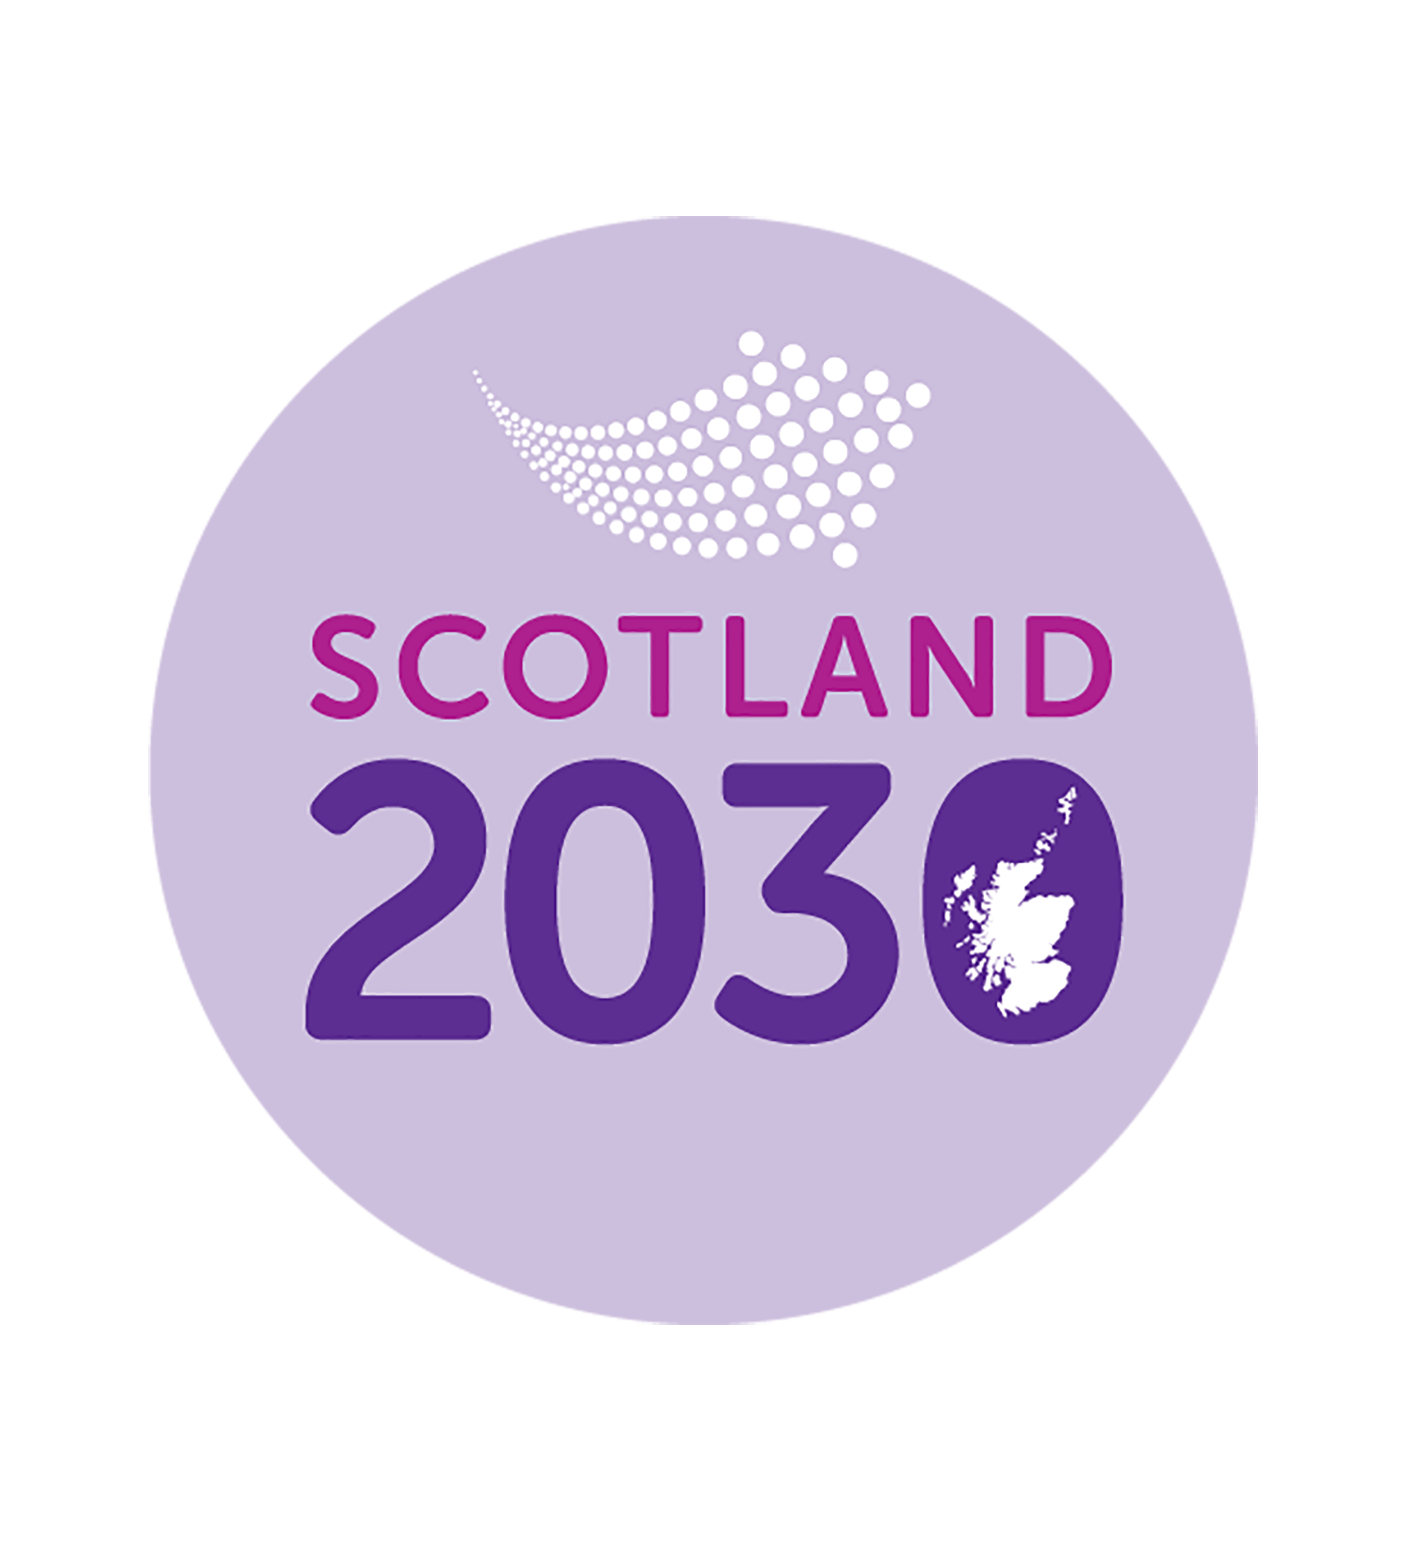 Scotland 2030 Logo